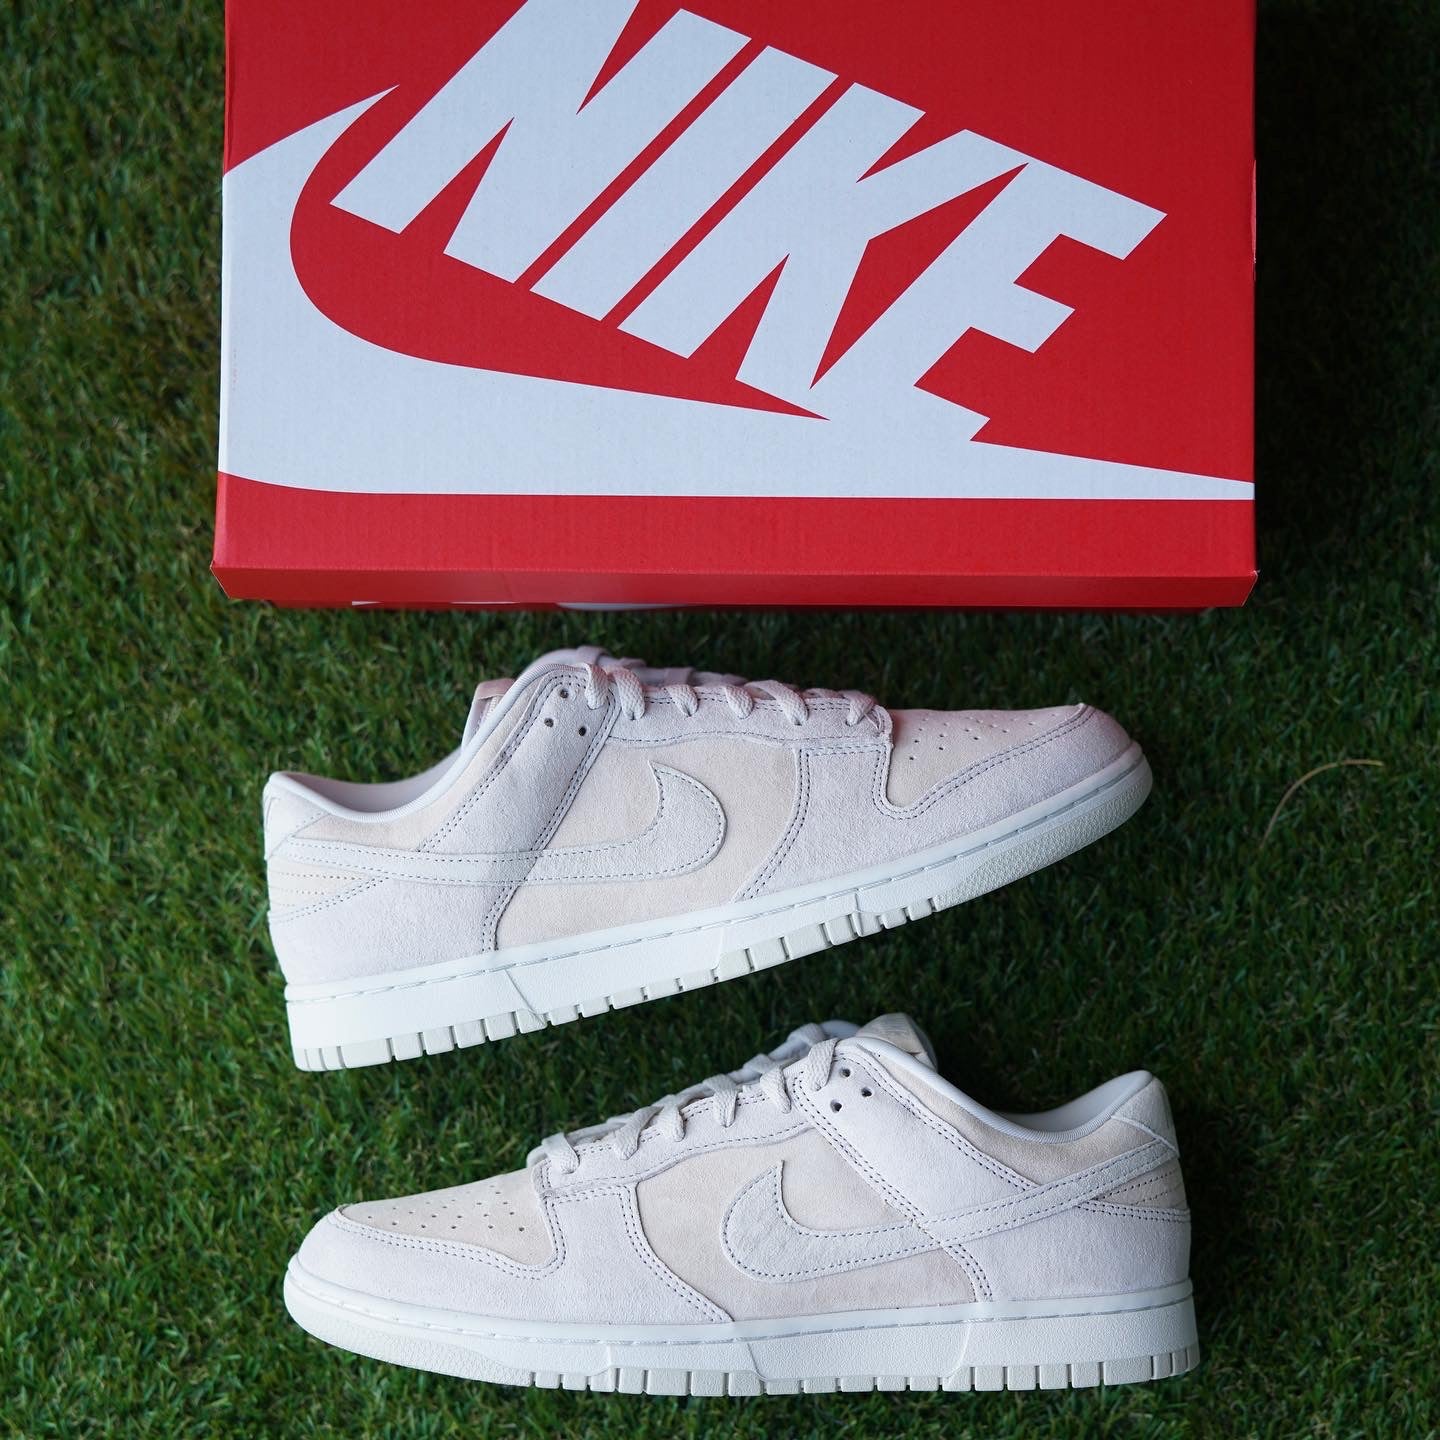 Nike Dunk Low Premium “Vast Grey”